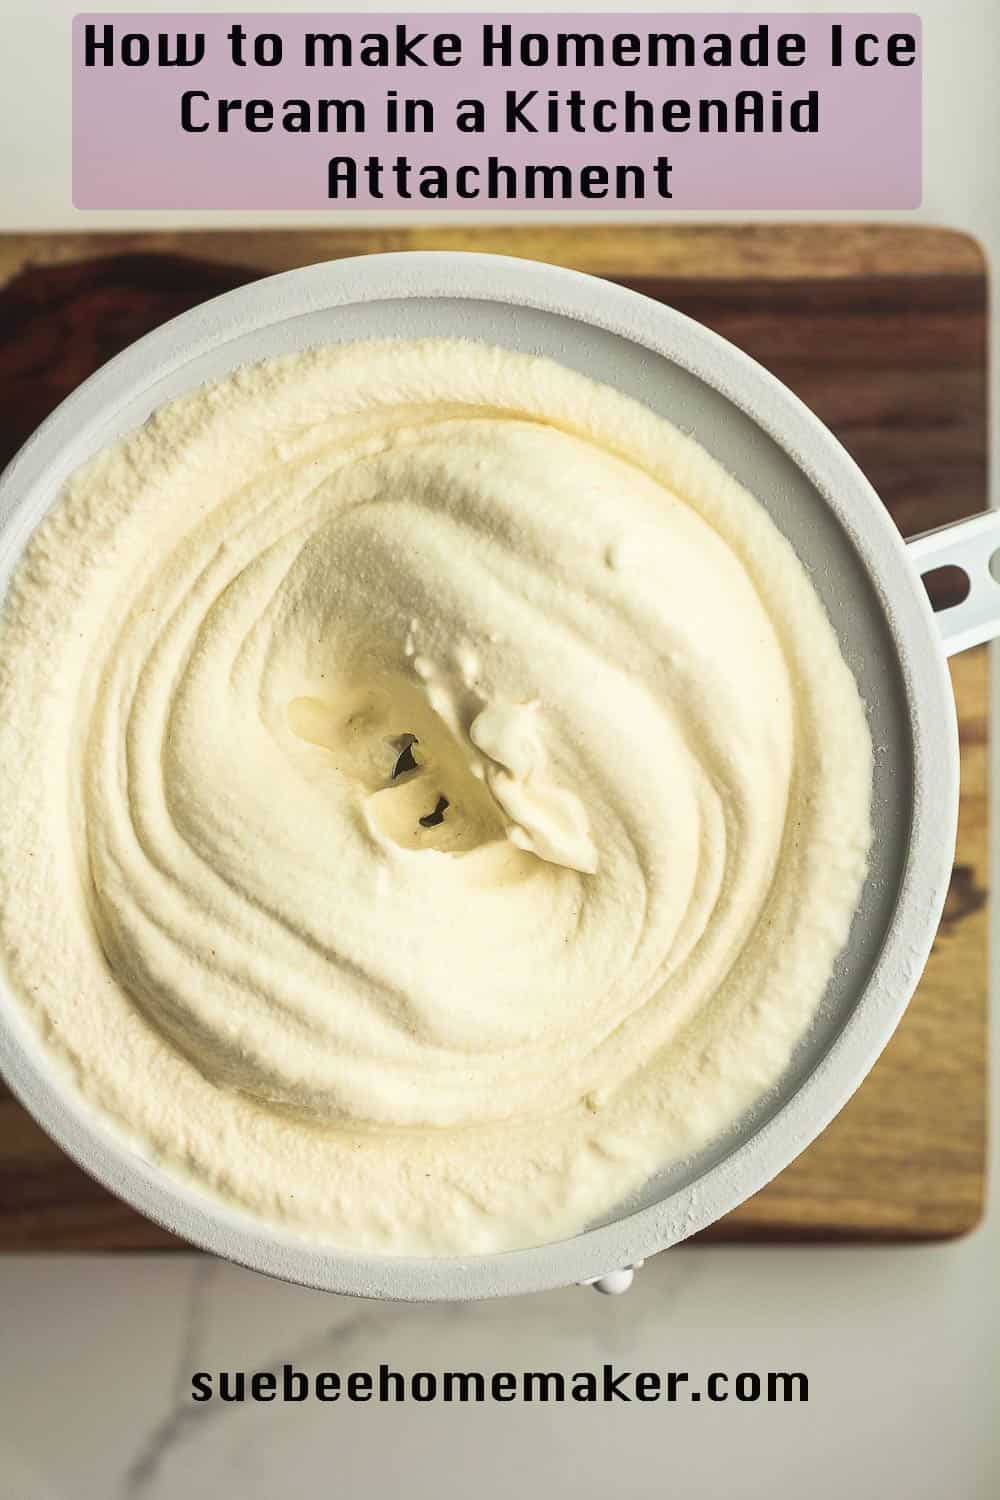 https://suebeehomemaker.com/wp-content/uploads/2021/07/how-to-make-homemade-ice-cream-in-kitchenaid-attachment-pin.jpg